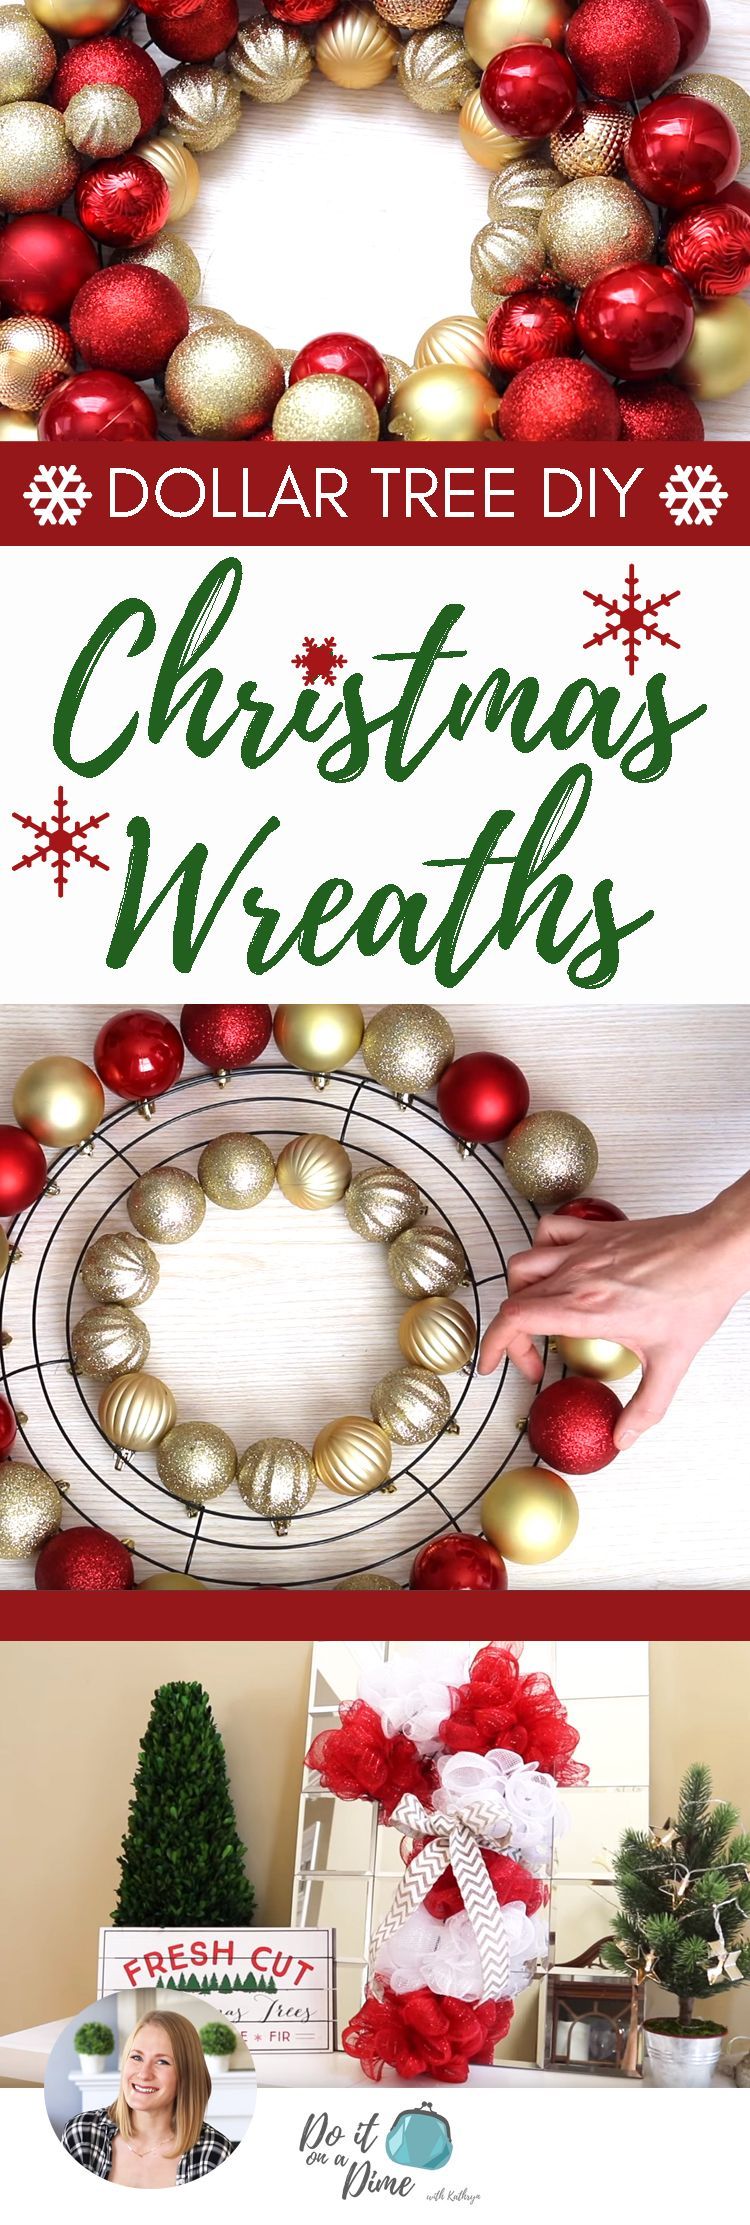 Dollar Tree Christmas DIY Wreaths 2017 - Dollar Tree Christmas DIY Wreaths 2017 -   19 diy Christmas wreath ideas